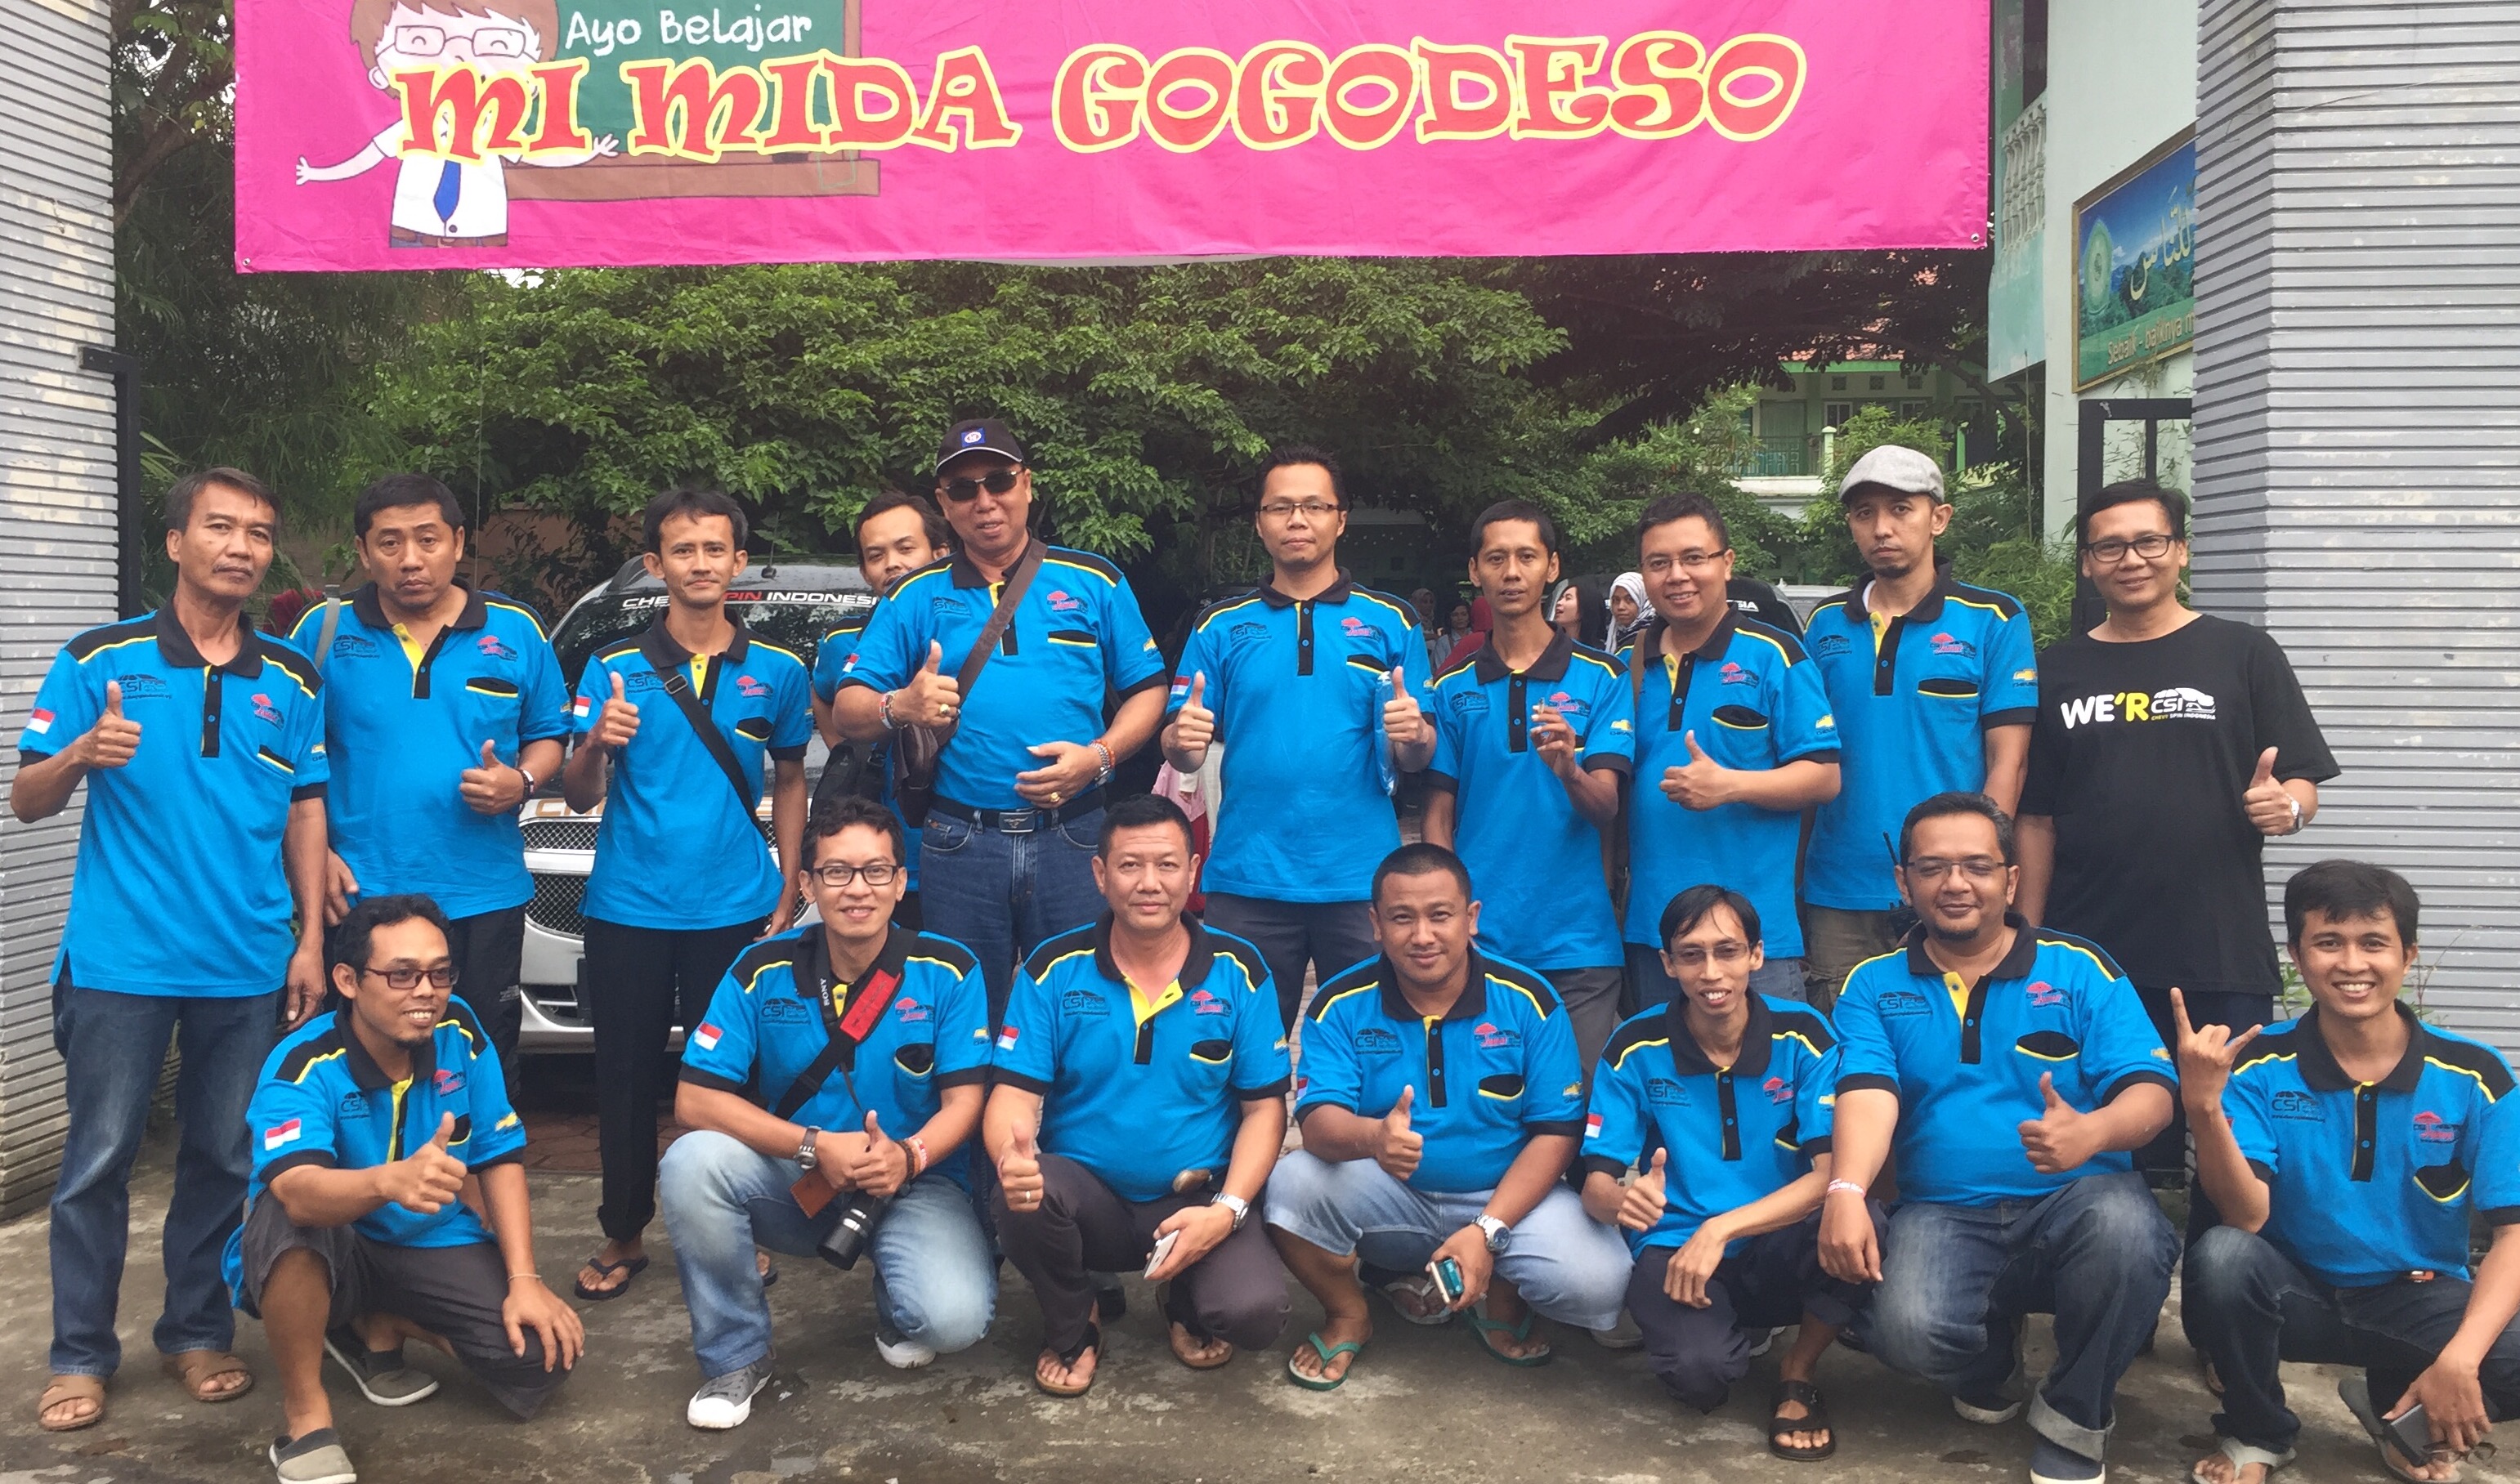 SEDULURAN: Anggota komunitas CSI Jawa Timur mejeng di depan MI Miftahul Huda Gogodeso Blitat sebelum melanjutkan touring.